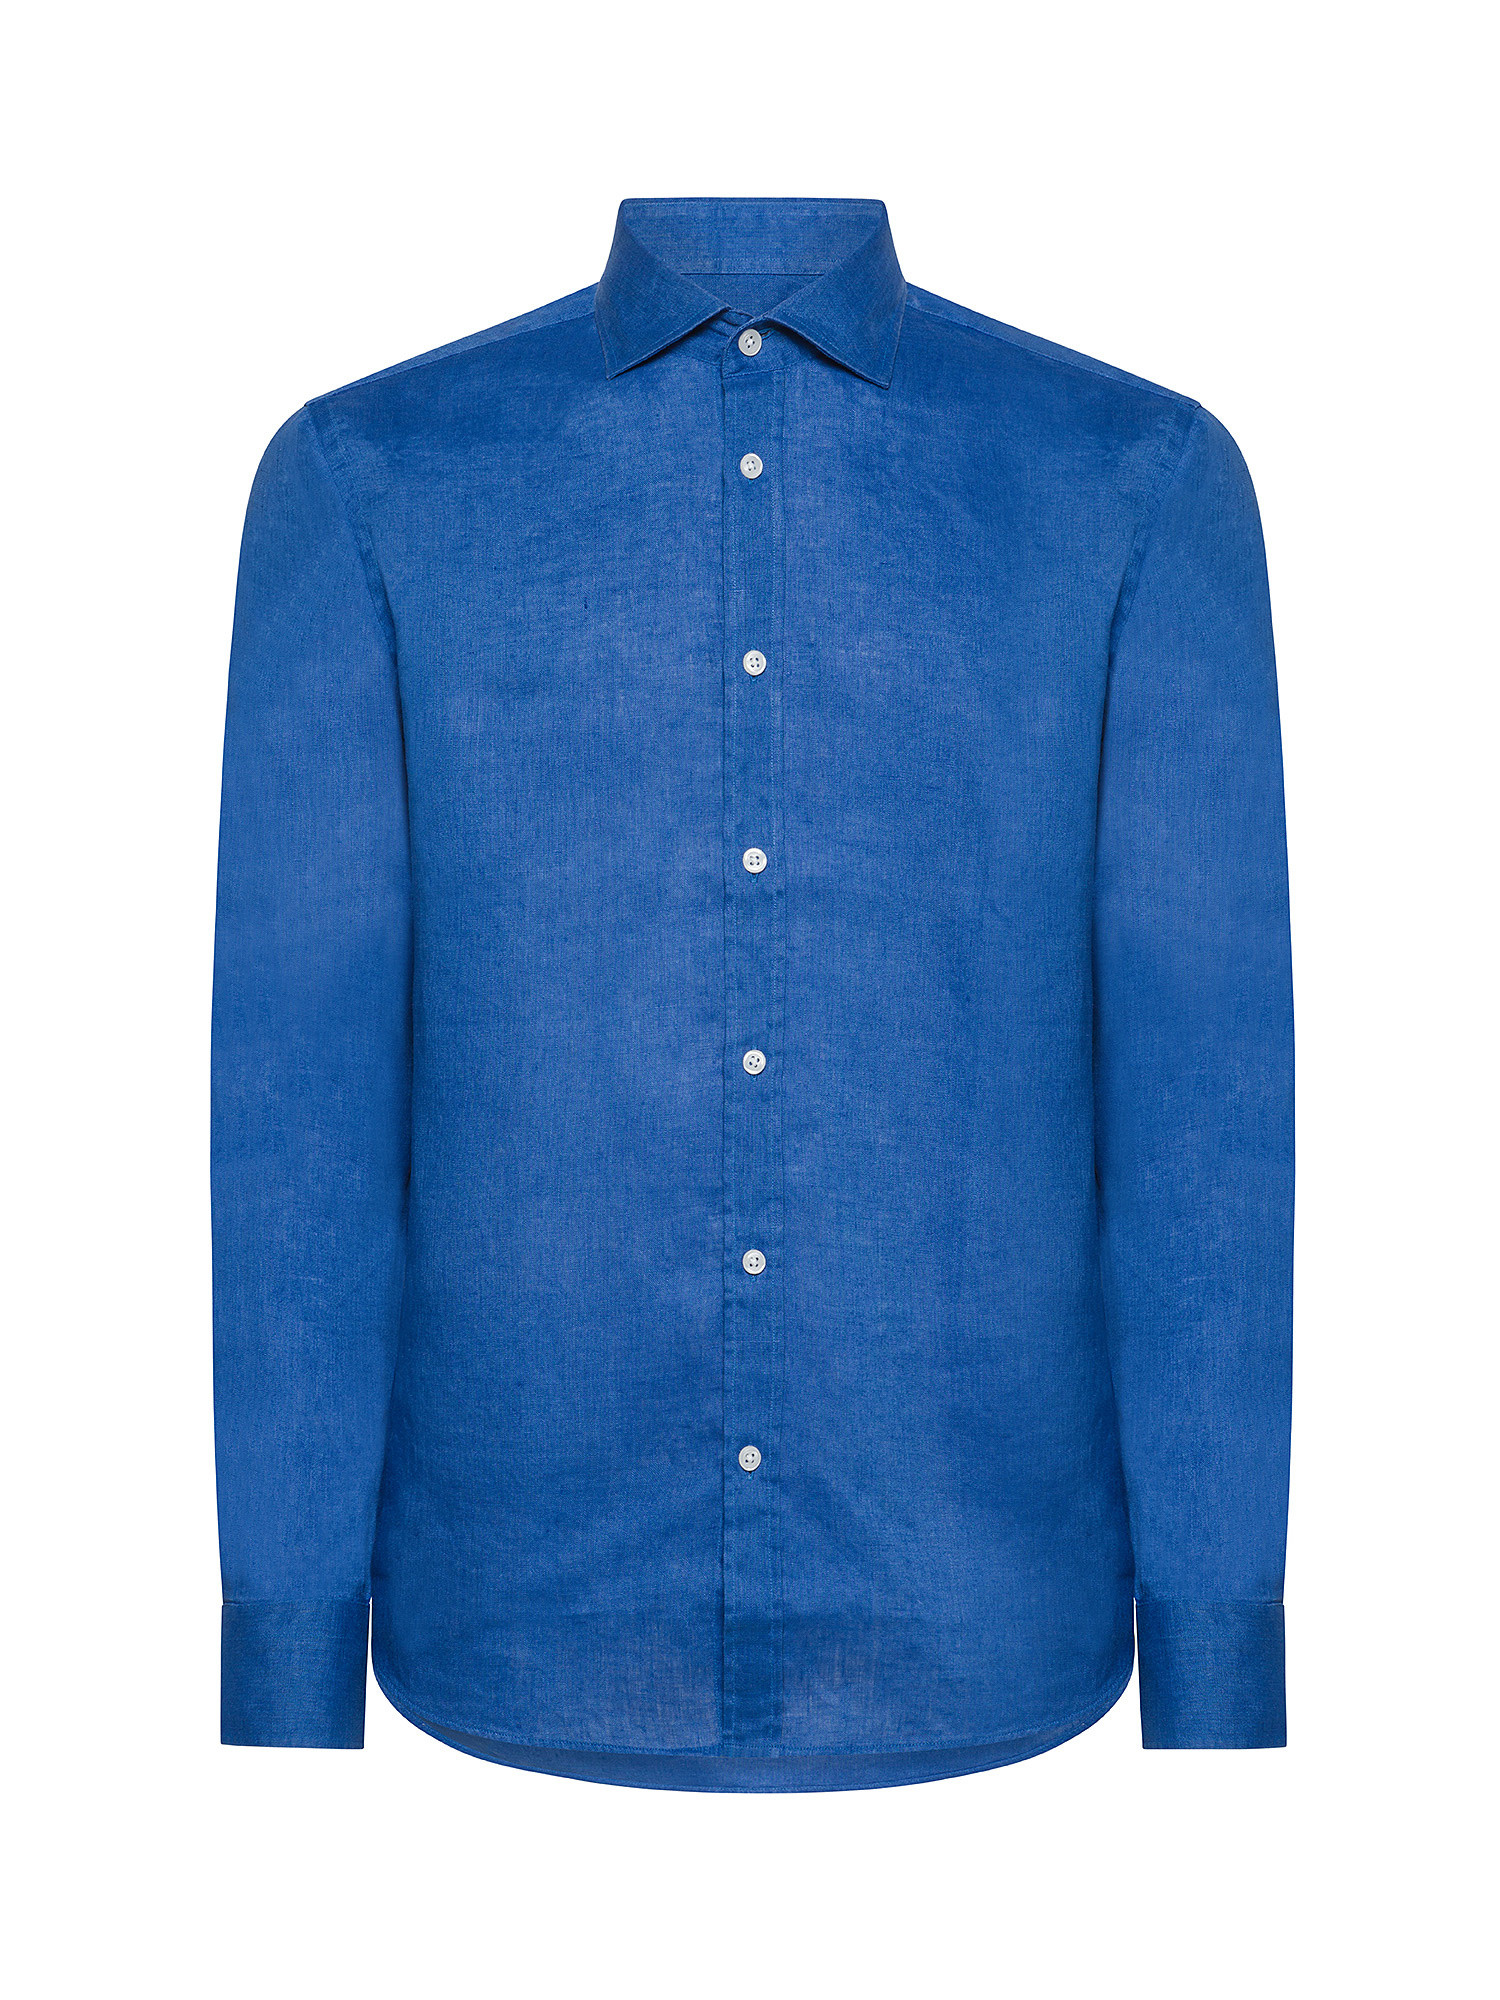 Luca D'Altieri - Camicia tailor fit in puro lino, Blu bluette, large image number 0